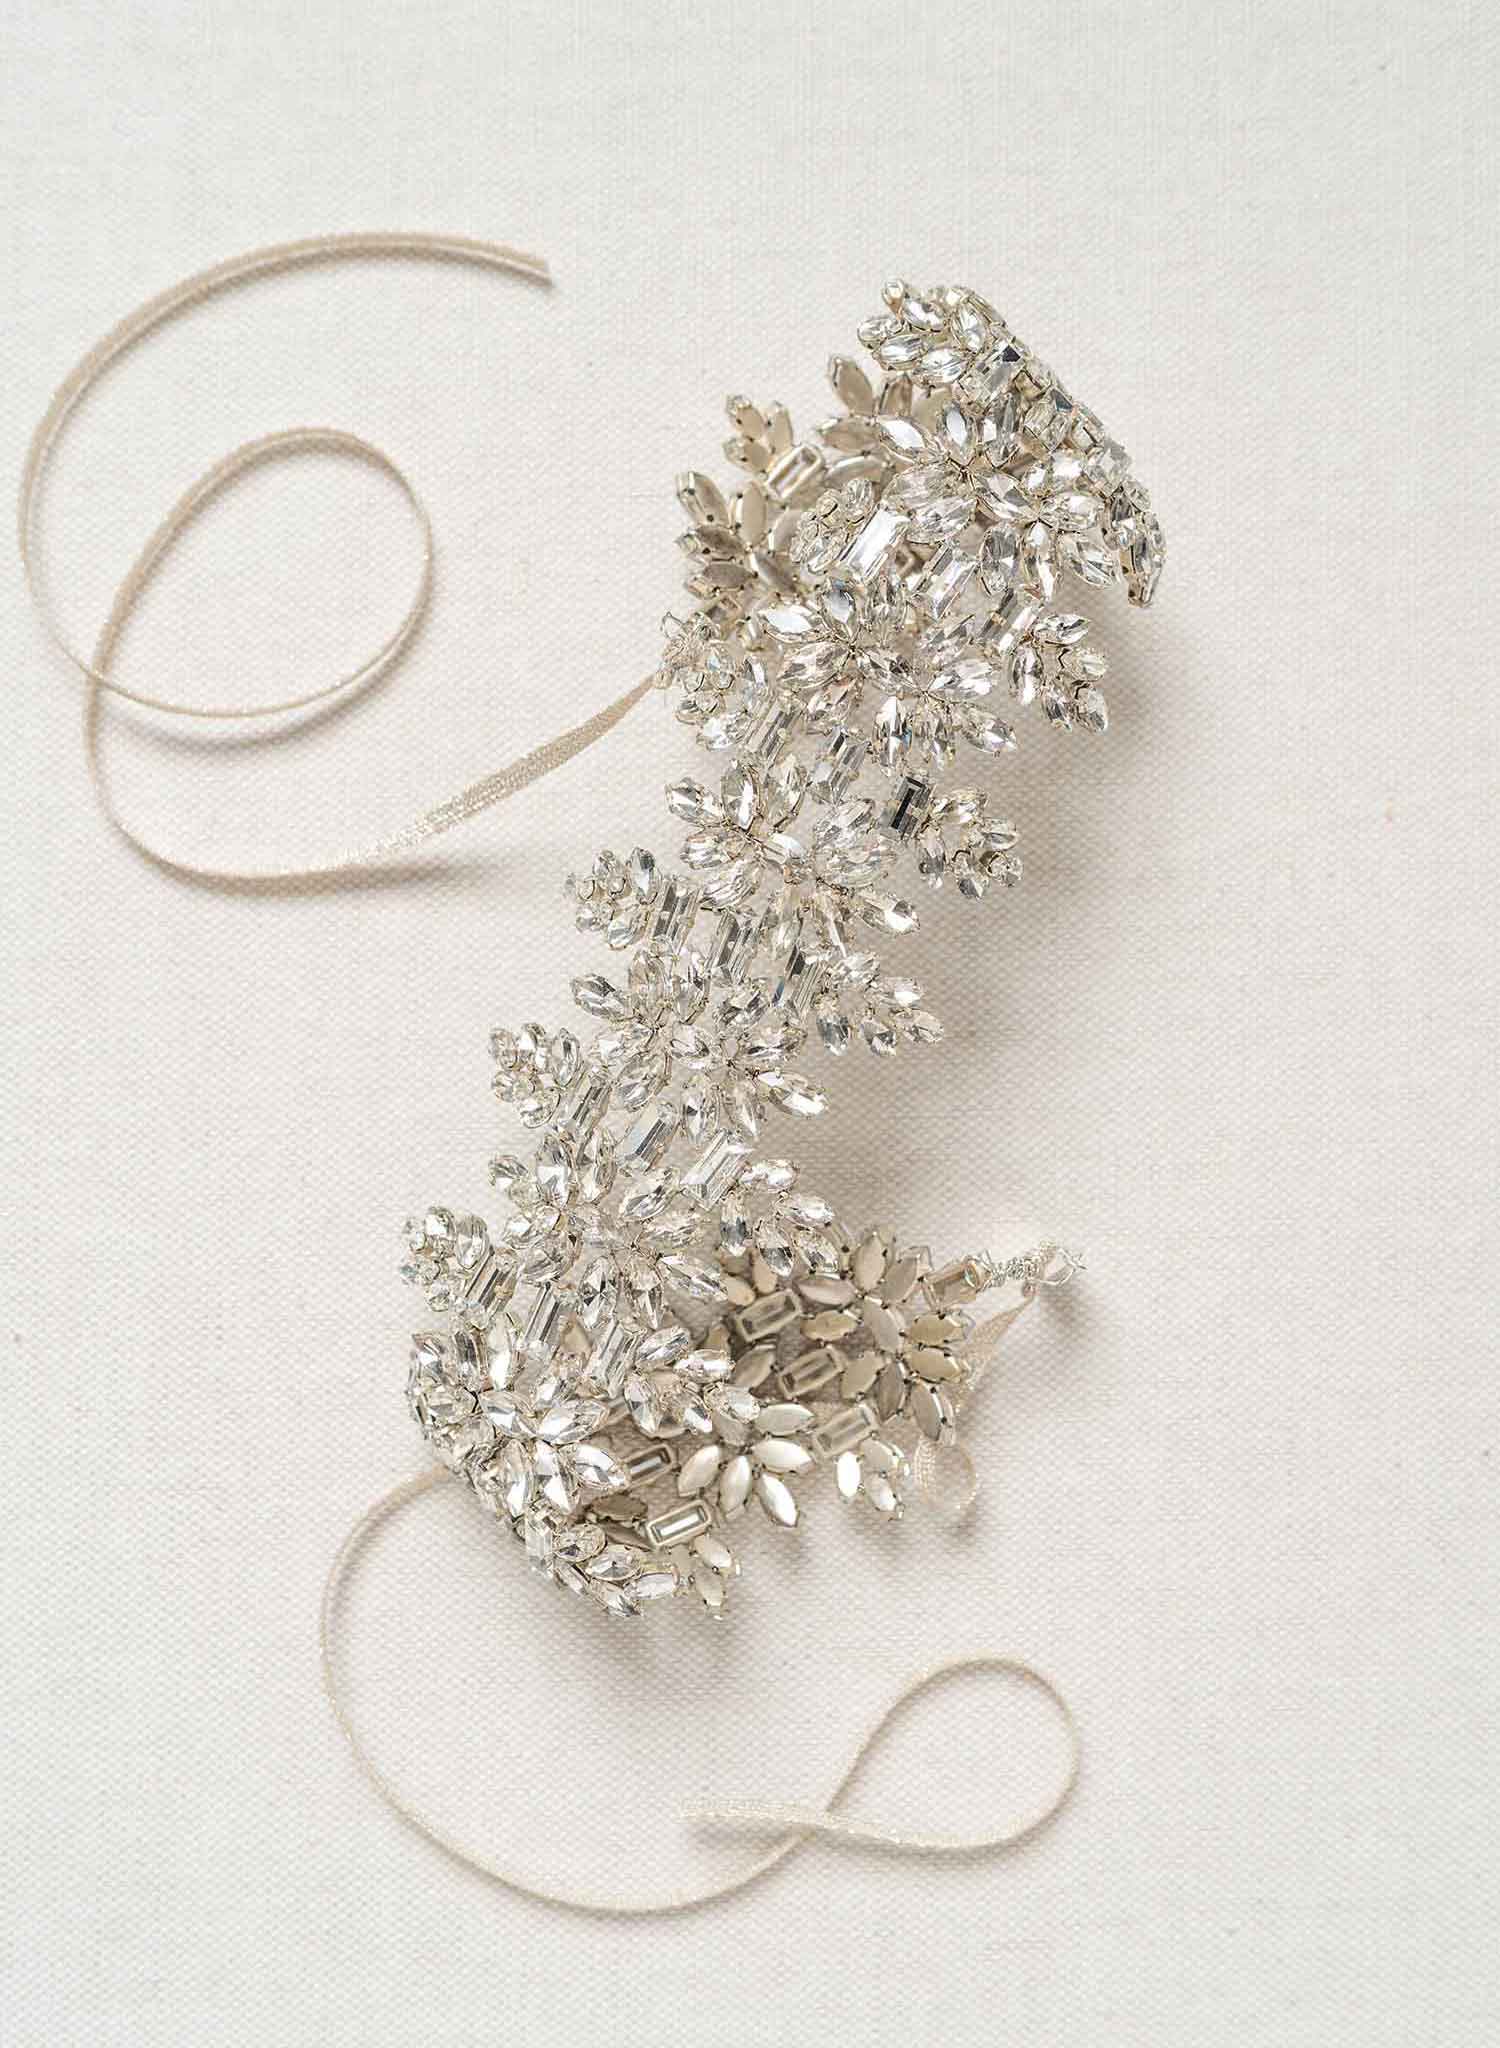 Regal crystal bridal headband - Style #2174